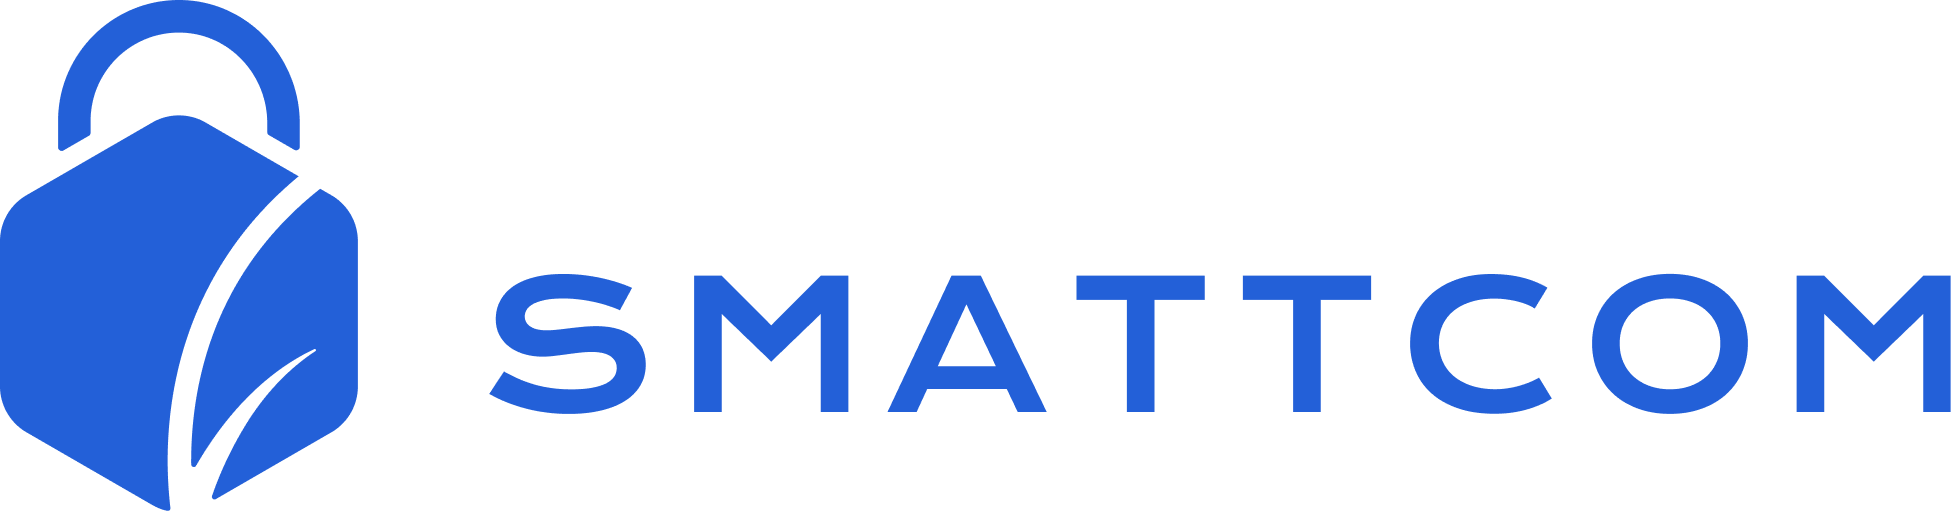 logo_slogan_azul